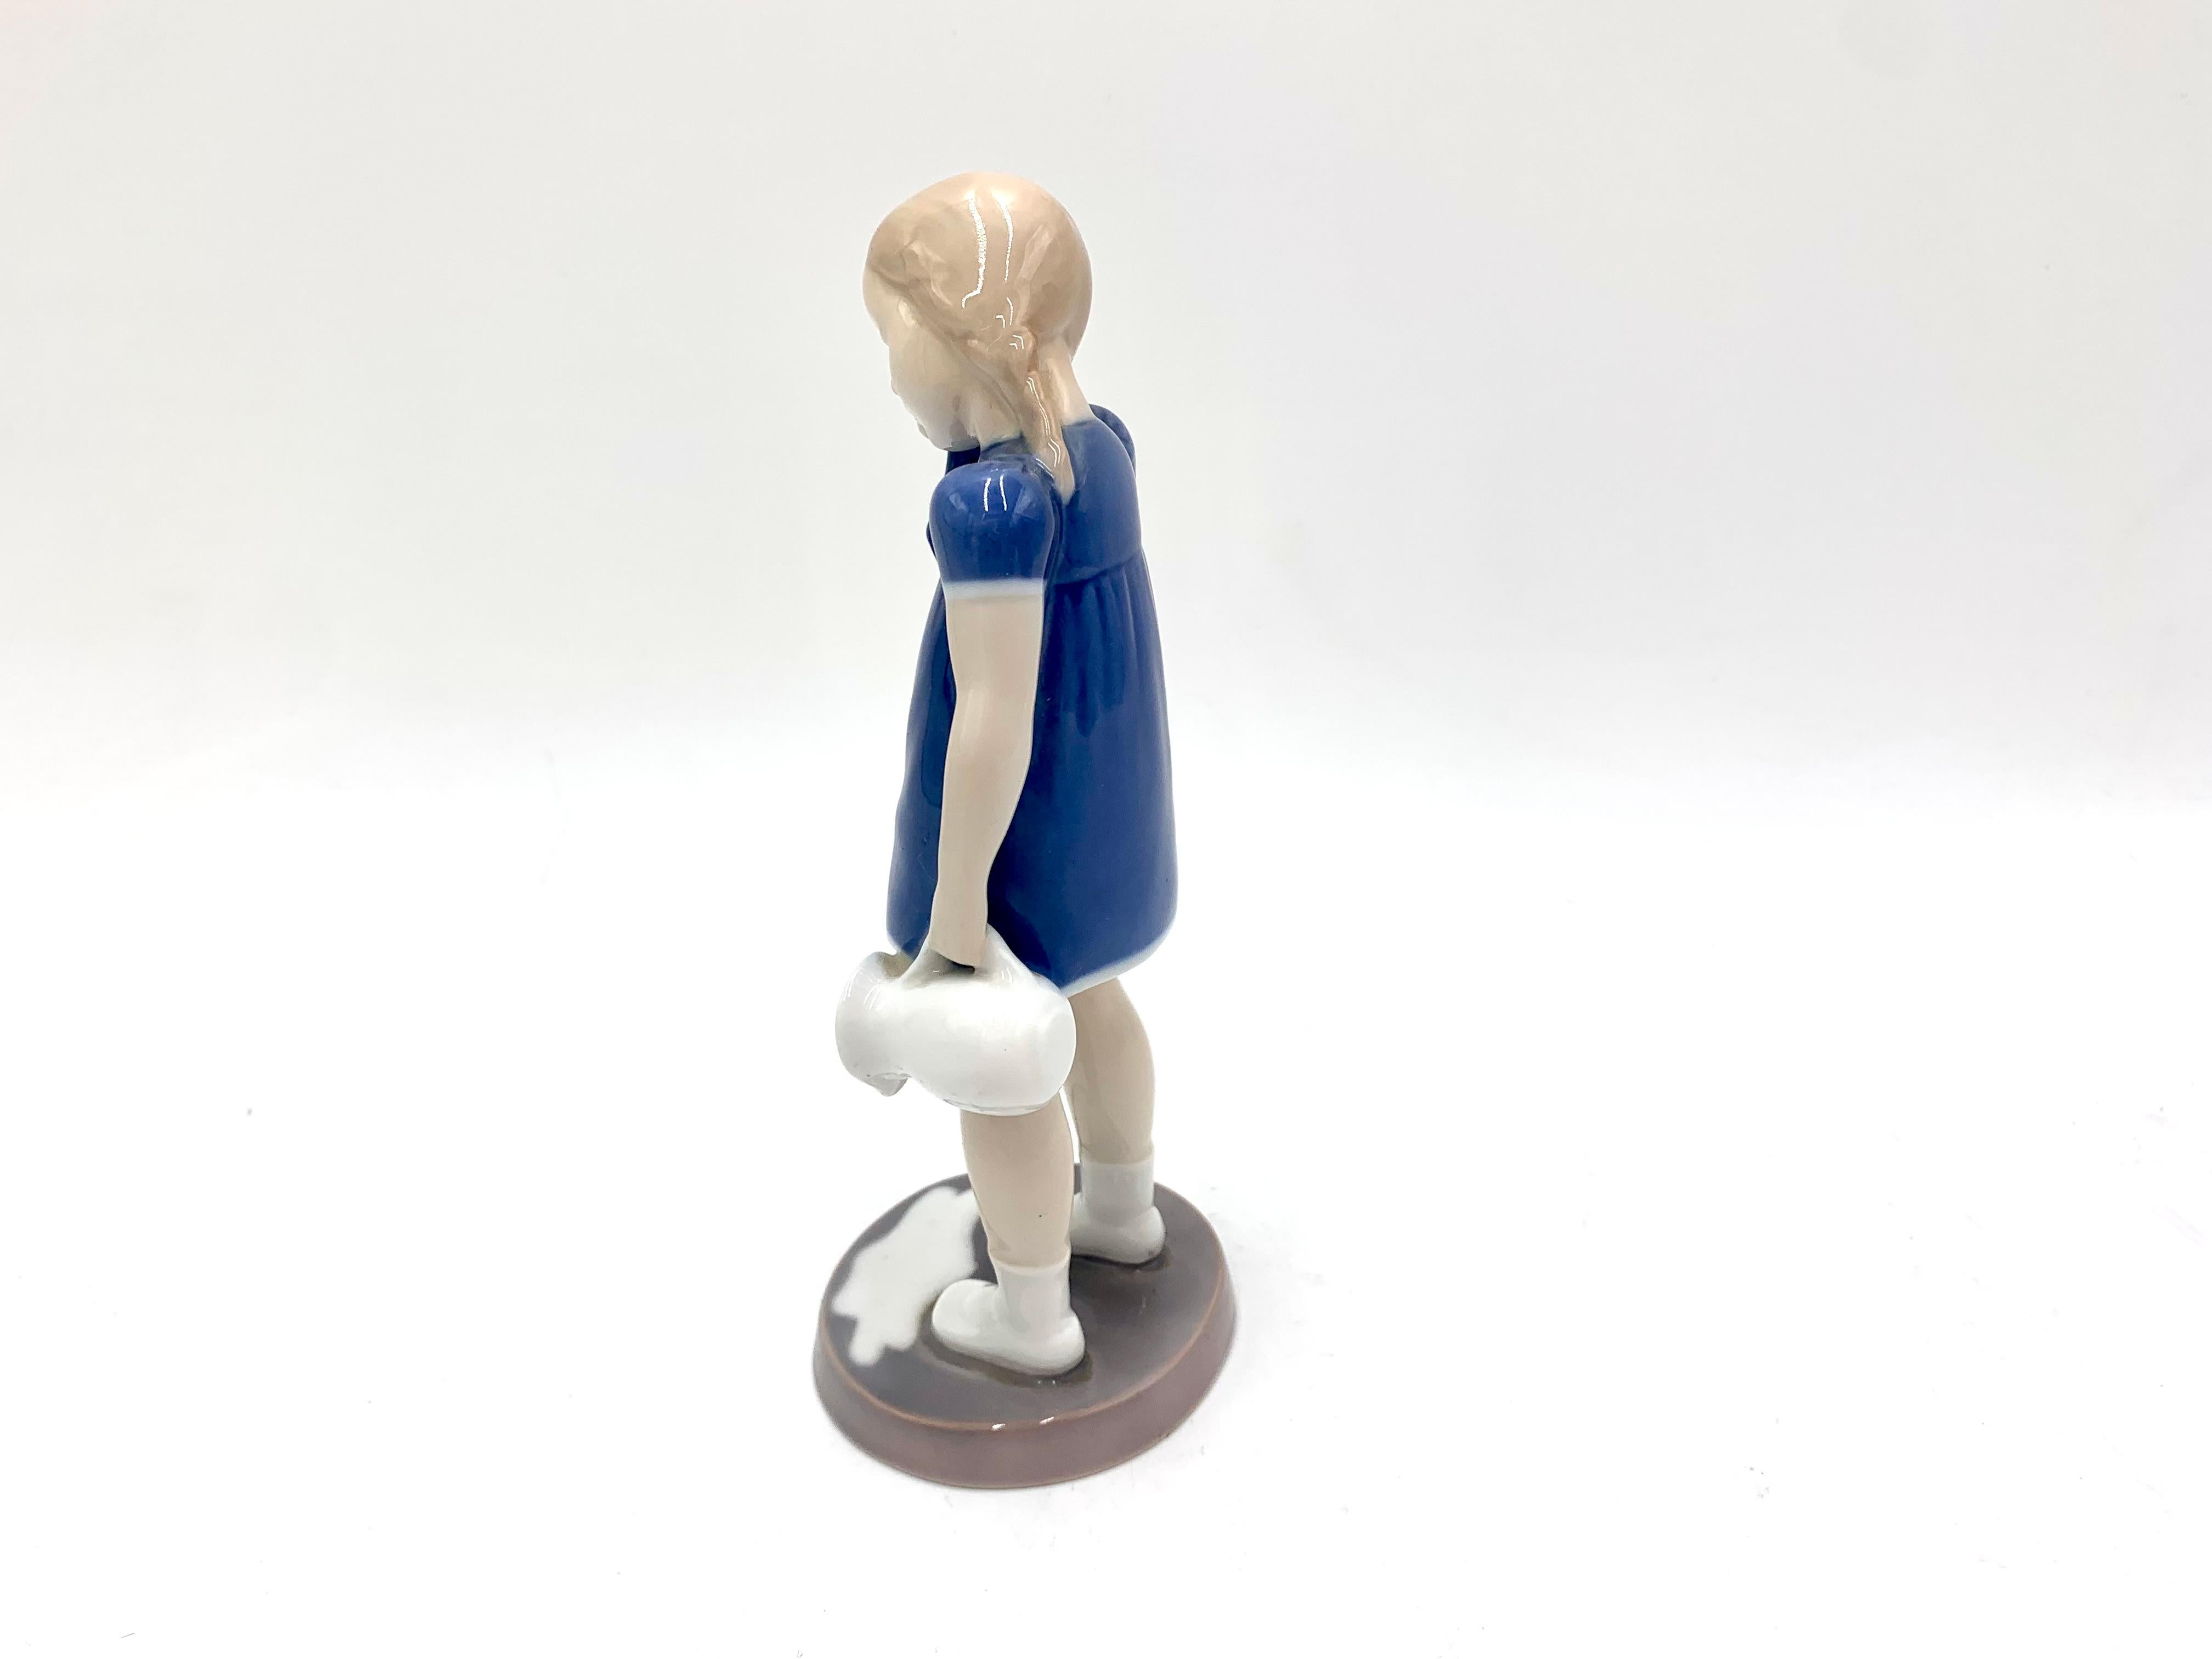 Mid-Century Modern Porcelain Figurine of a Crying Girl, Bing & Grondahl, Denmark, 1950s / 1960s